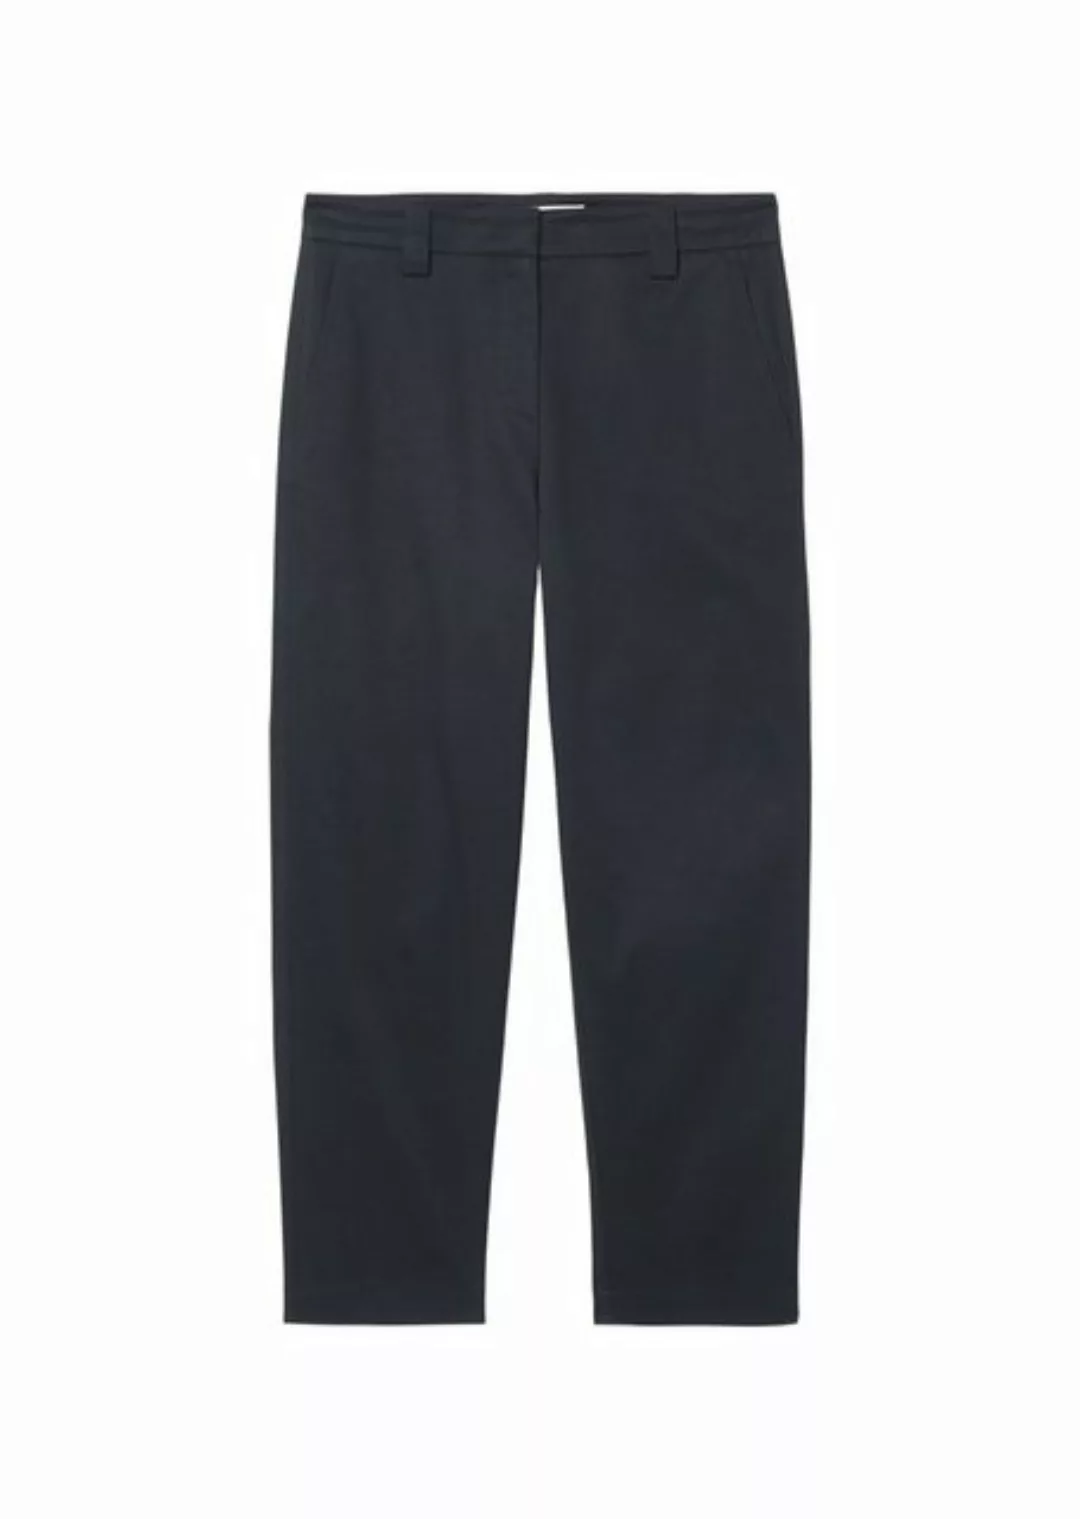 Marc O'Polo 7/8-Hose Pants, modern chino style, tapered leg, high rise, wel günstig online kaufen